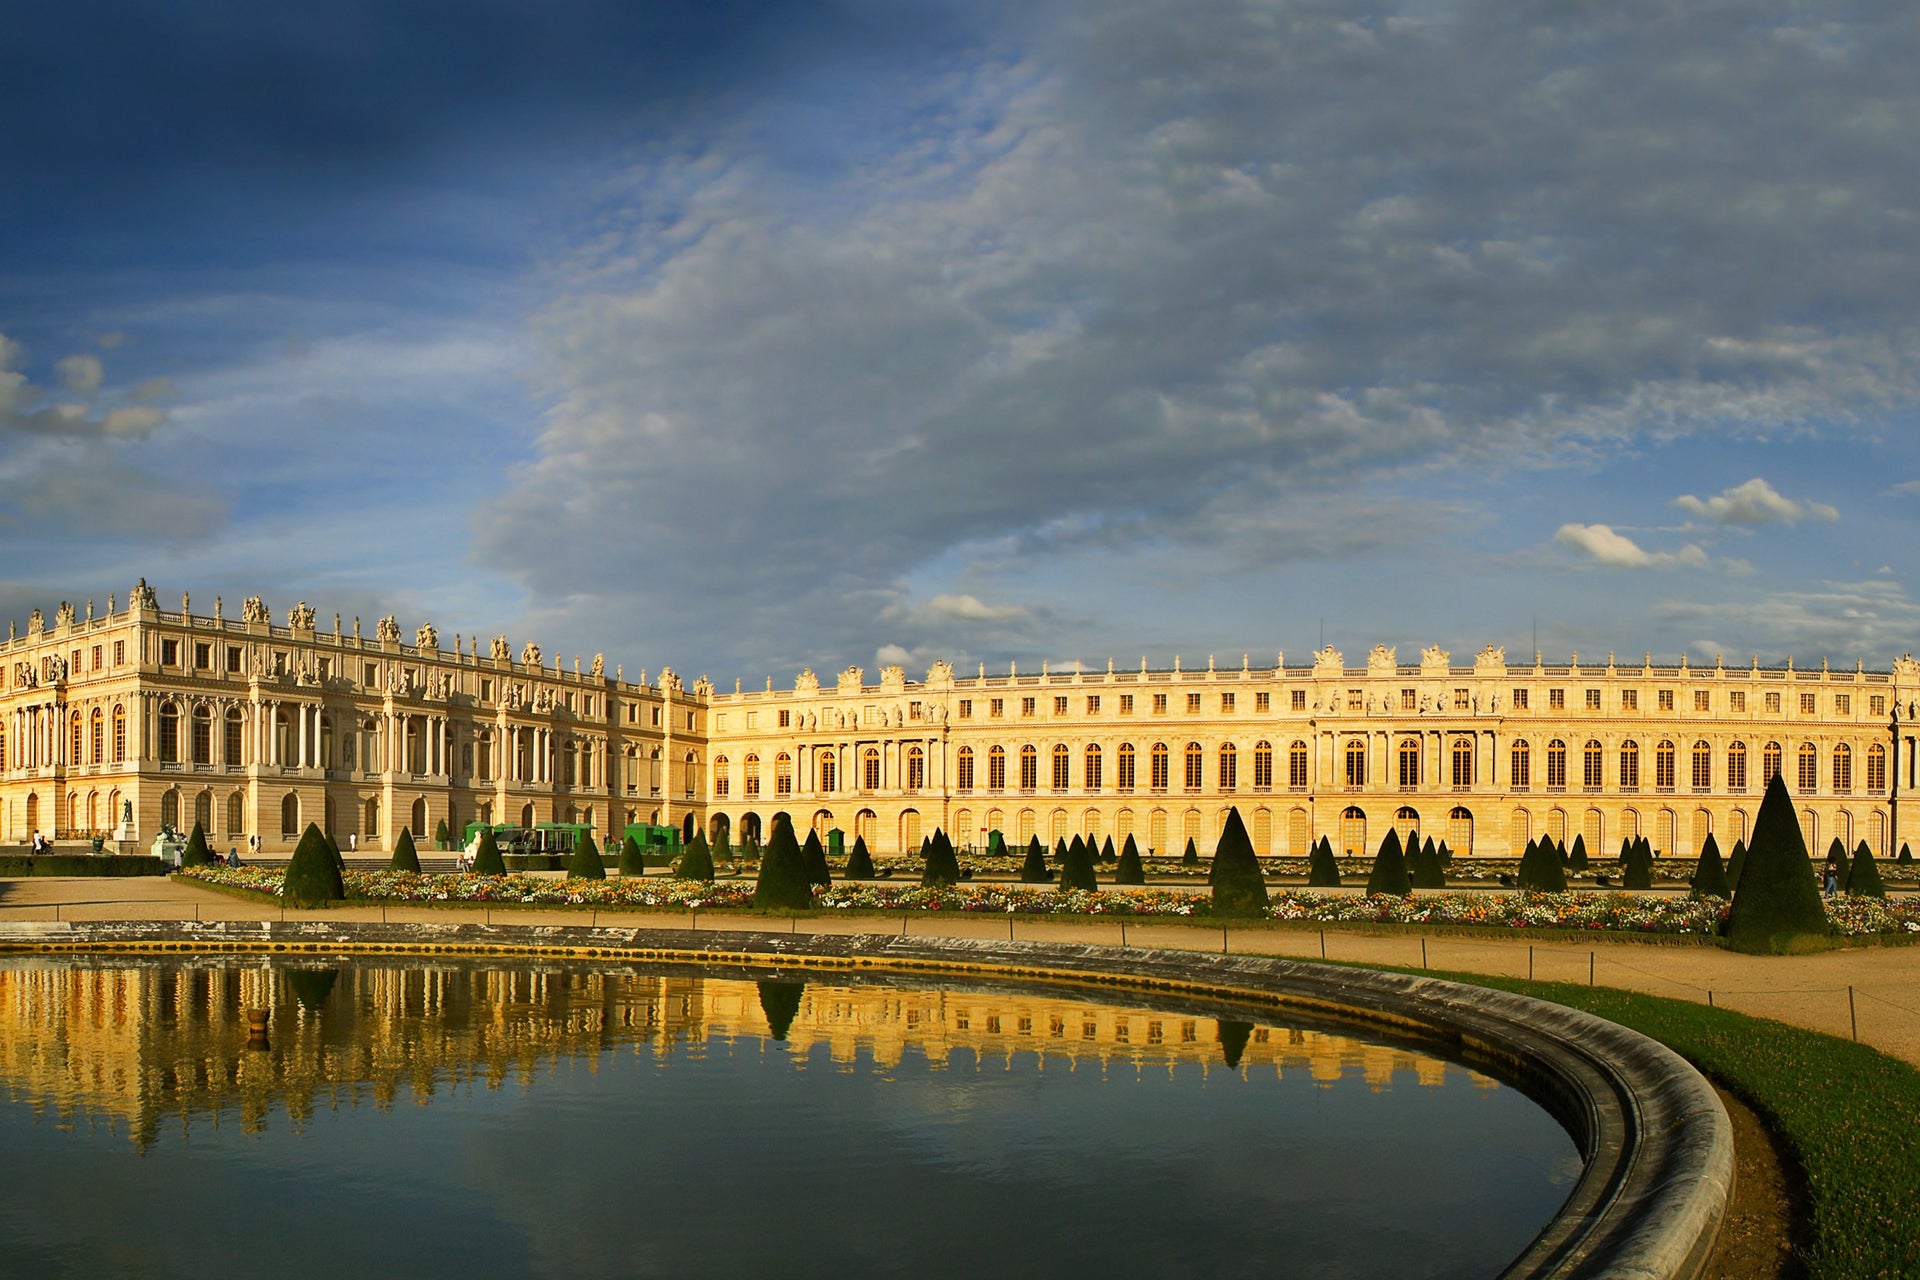 Visita guidata alla Reggia di Versailles